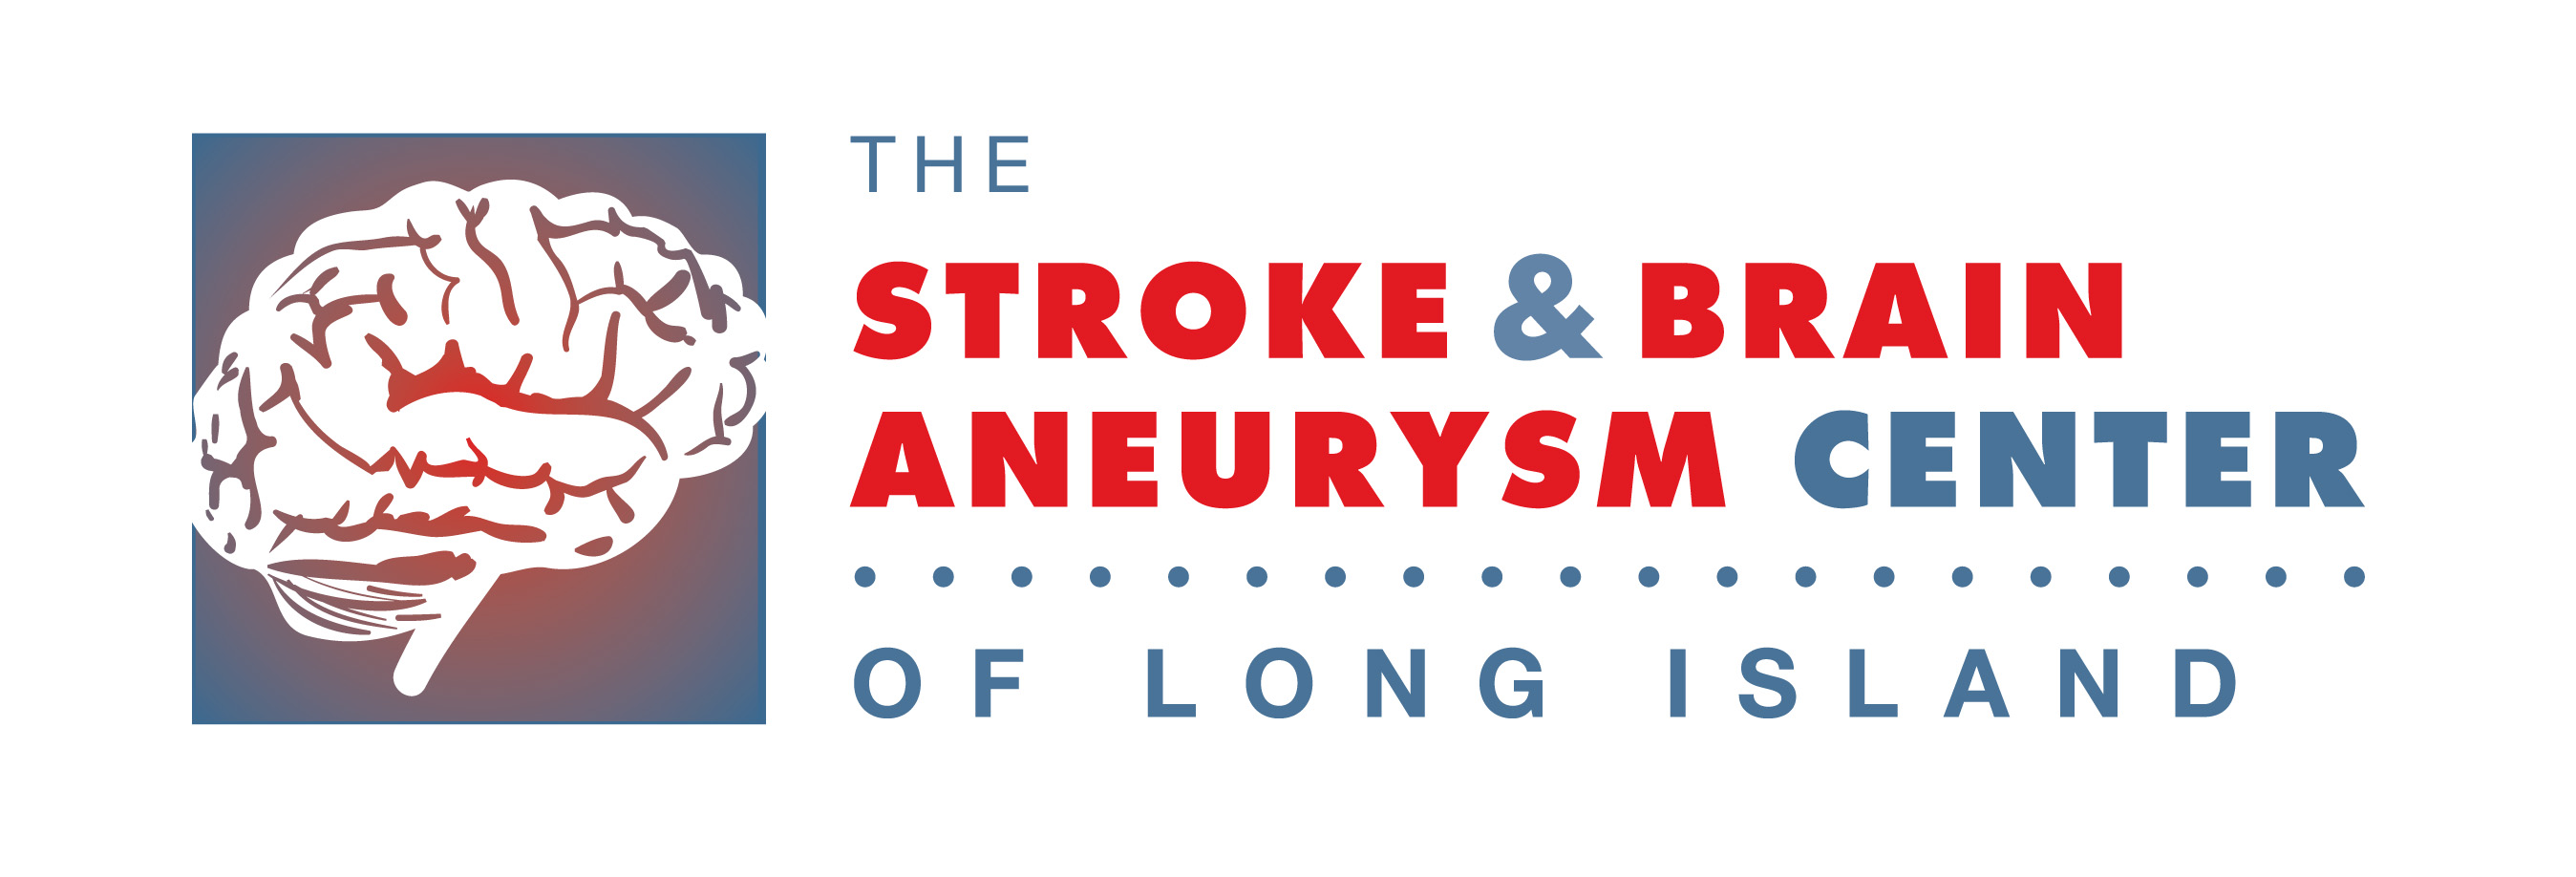 stroke and brain aneurysm center of long island logo